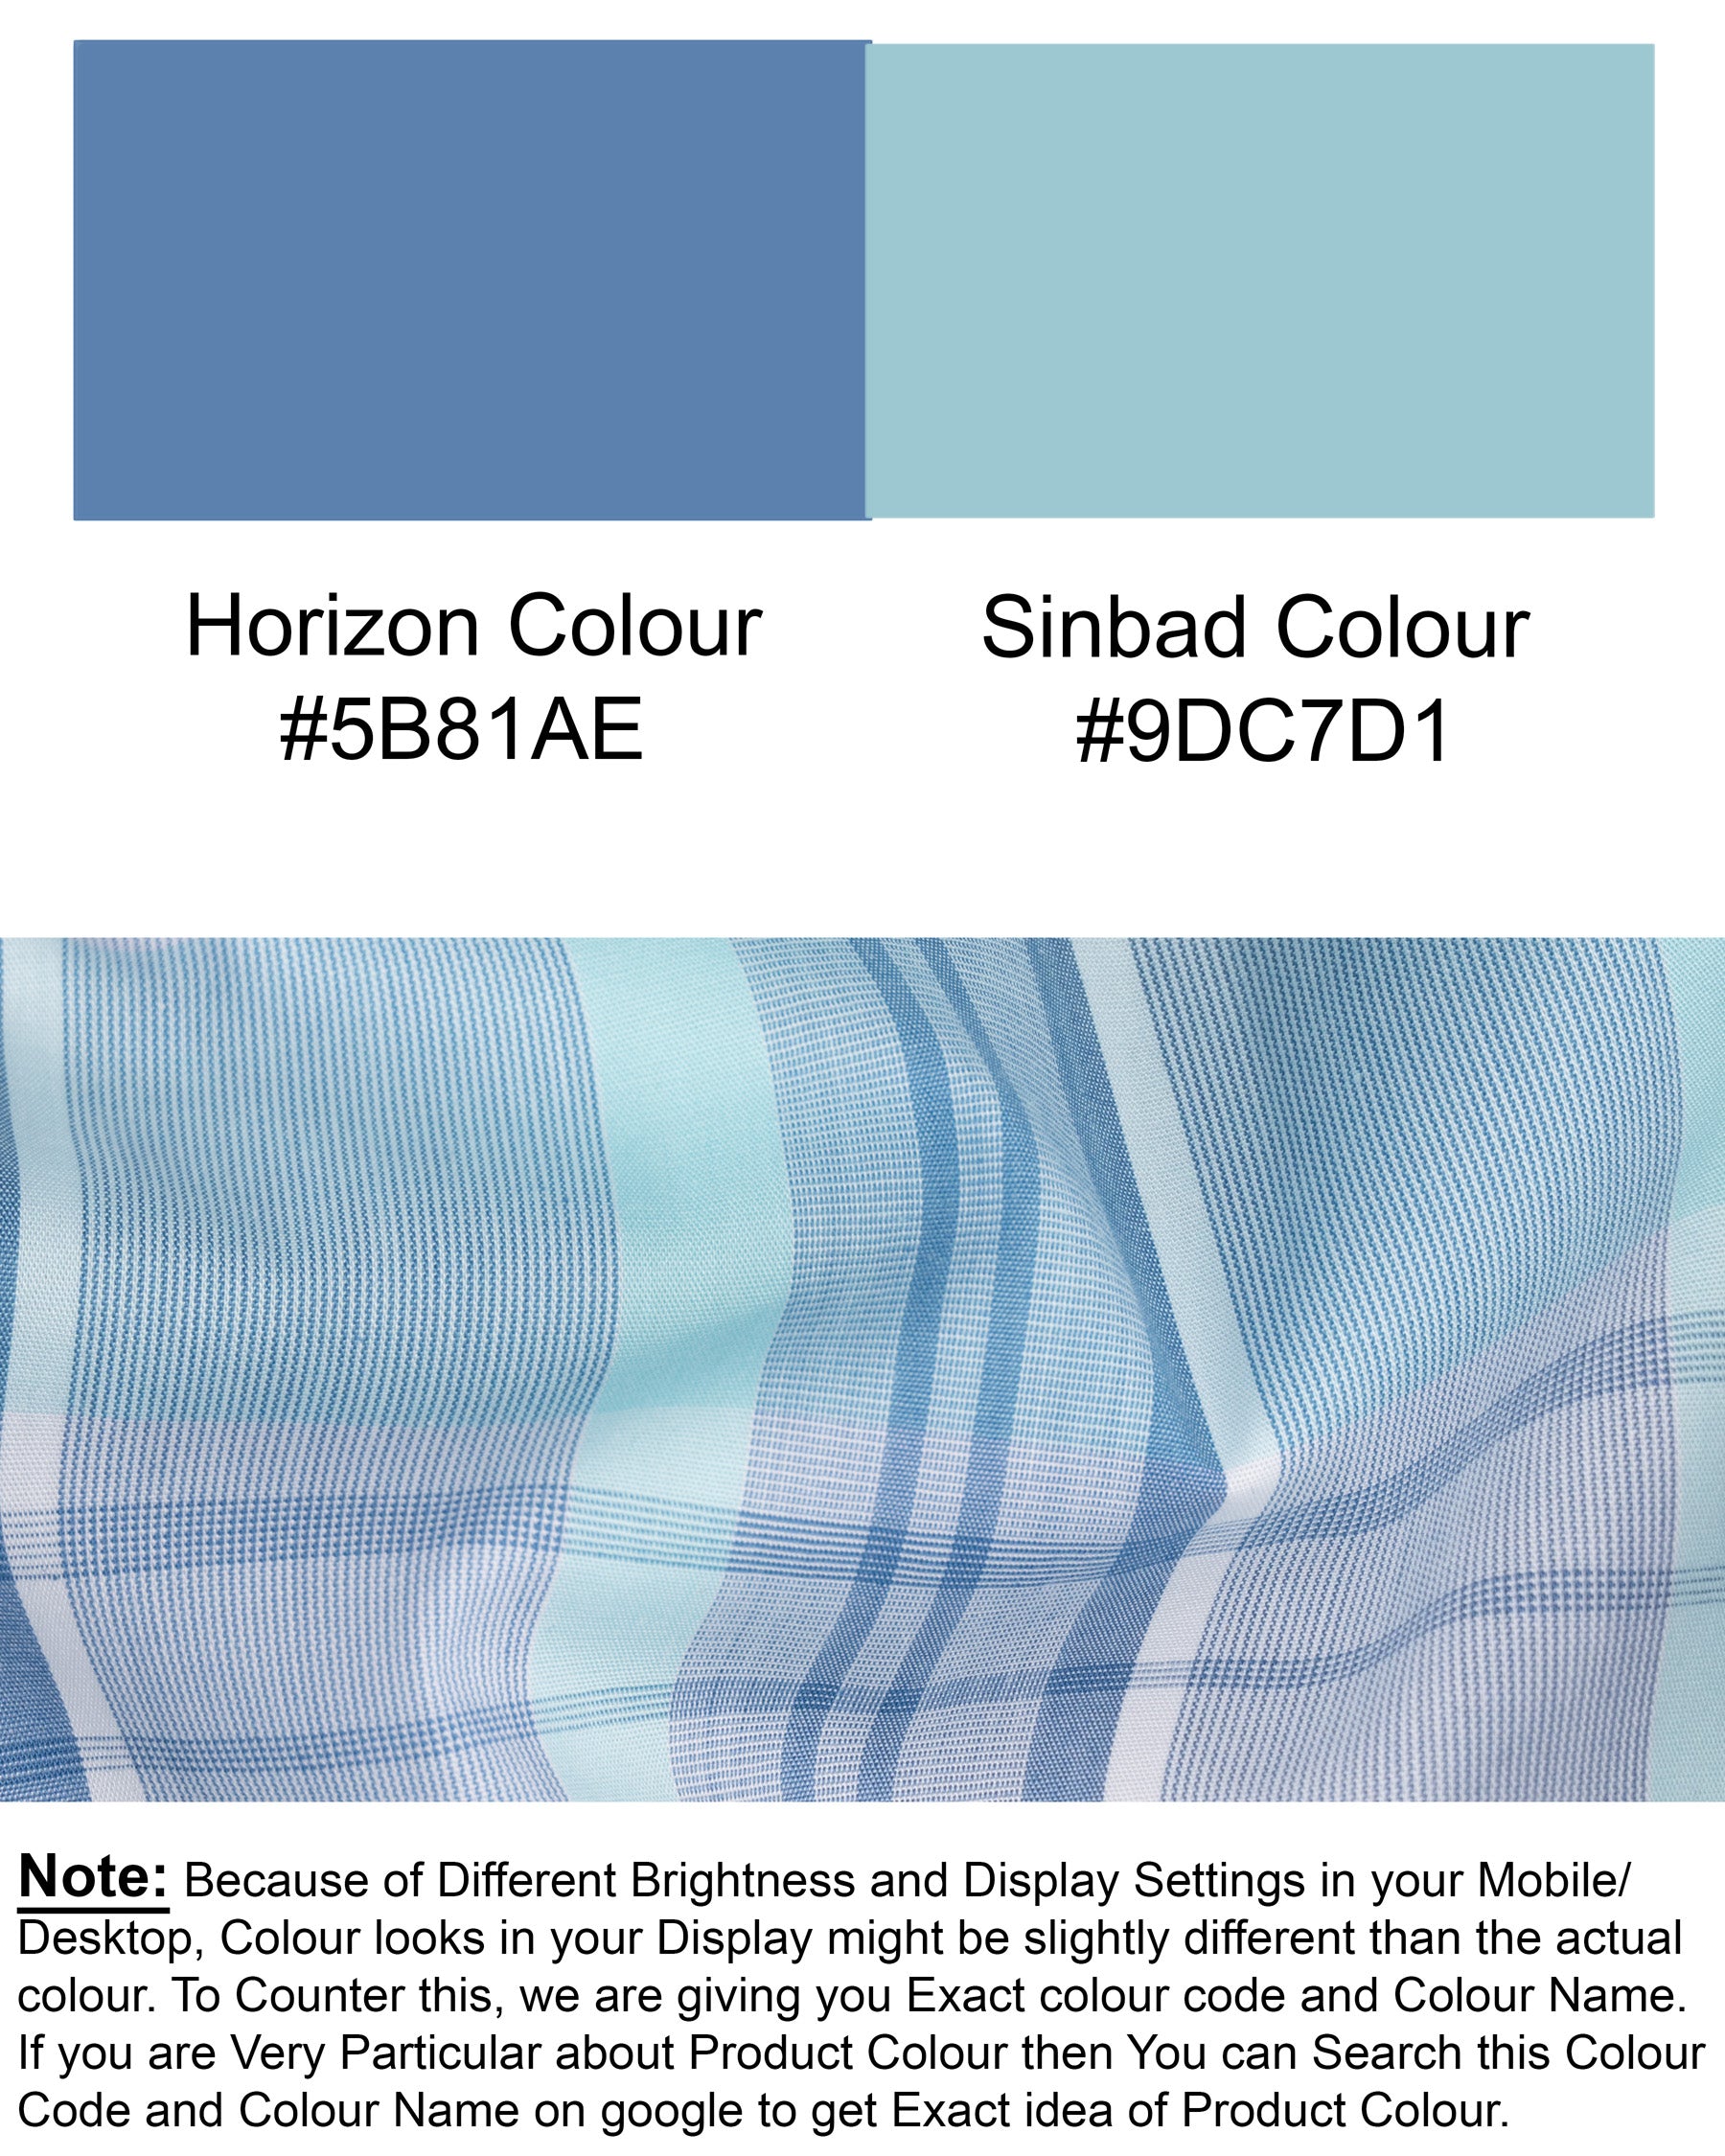 Horizon Blue with Sinbad Plaid Premium Cotton Shirt 5397-M-38, 5397-M-H-38, 5397-M-39, 5397-M-H-39, 5397-M-40, 5397-M-H-40, 5397-M-42, 5397-M-H-42, 5397-M-44, 5397-M-H-44, 5397-M-46, 5397-M-H-46, 5397-M-48, 5397-M-H-48, 5397-M-50, 5397-M-H-50, 5397-M-52, 5397-M-H-52